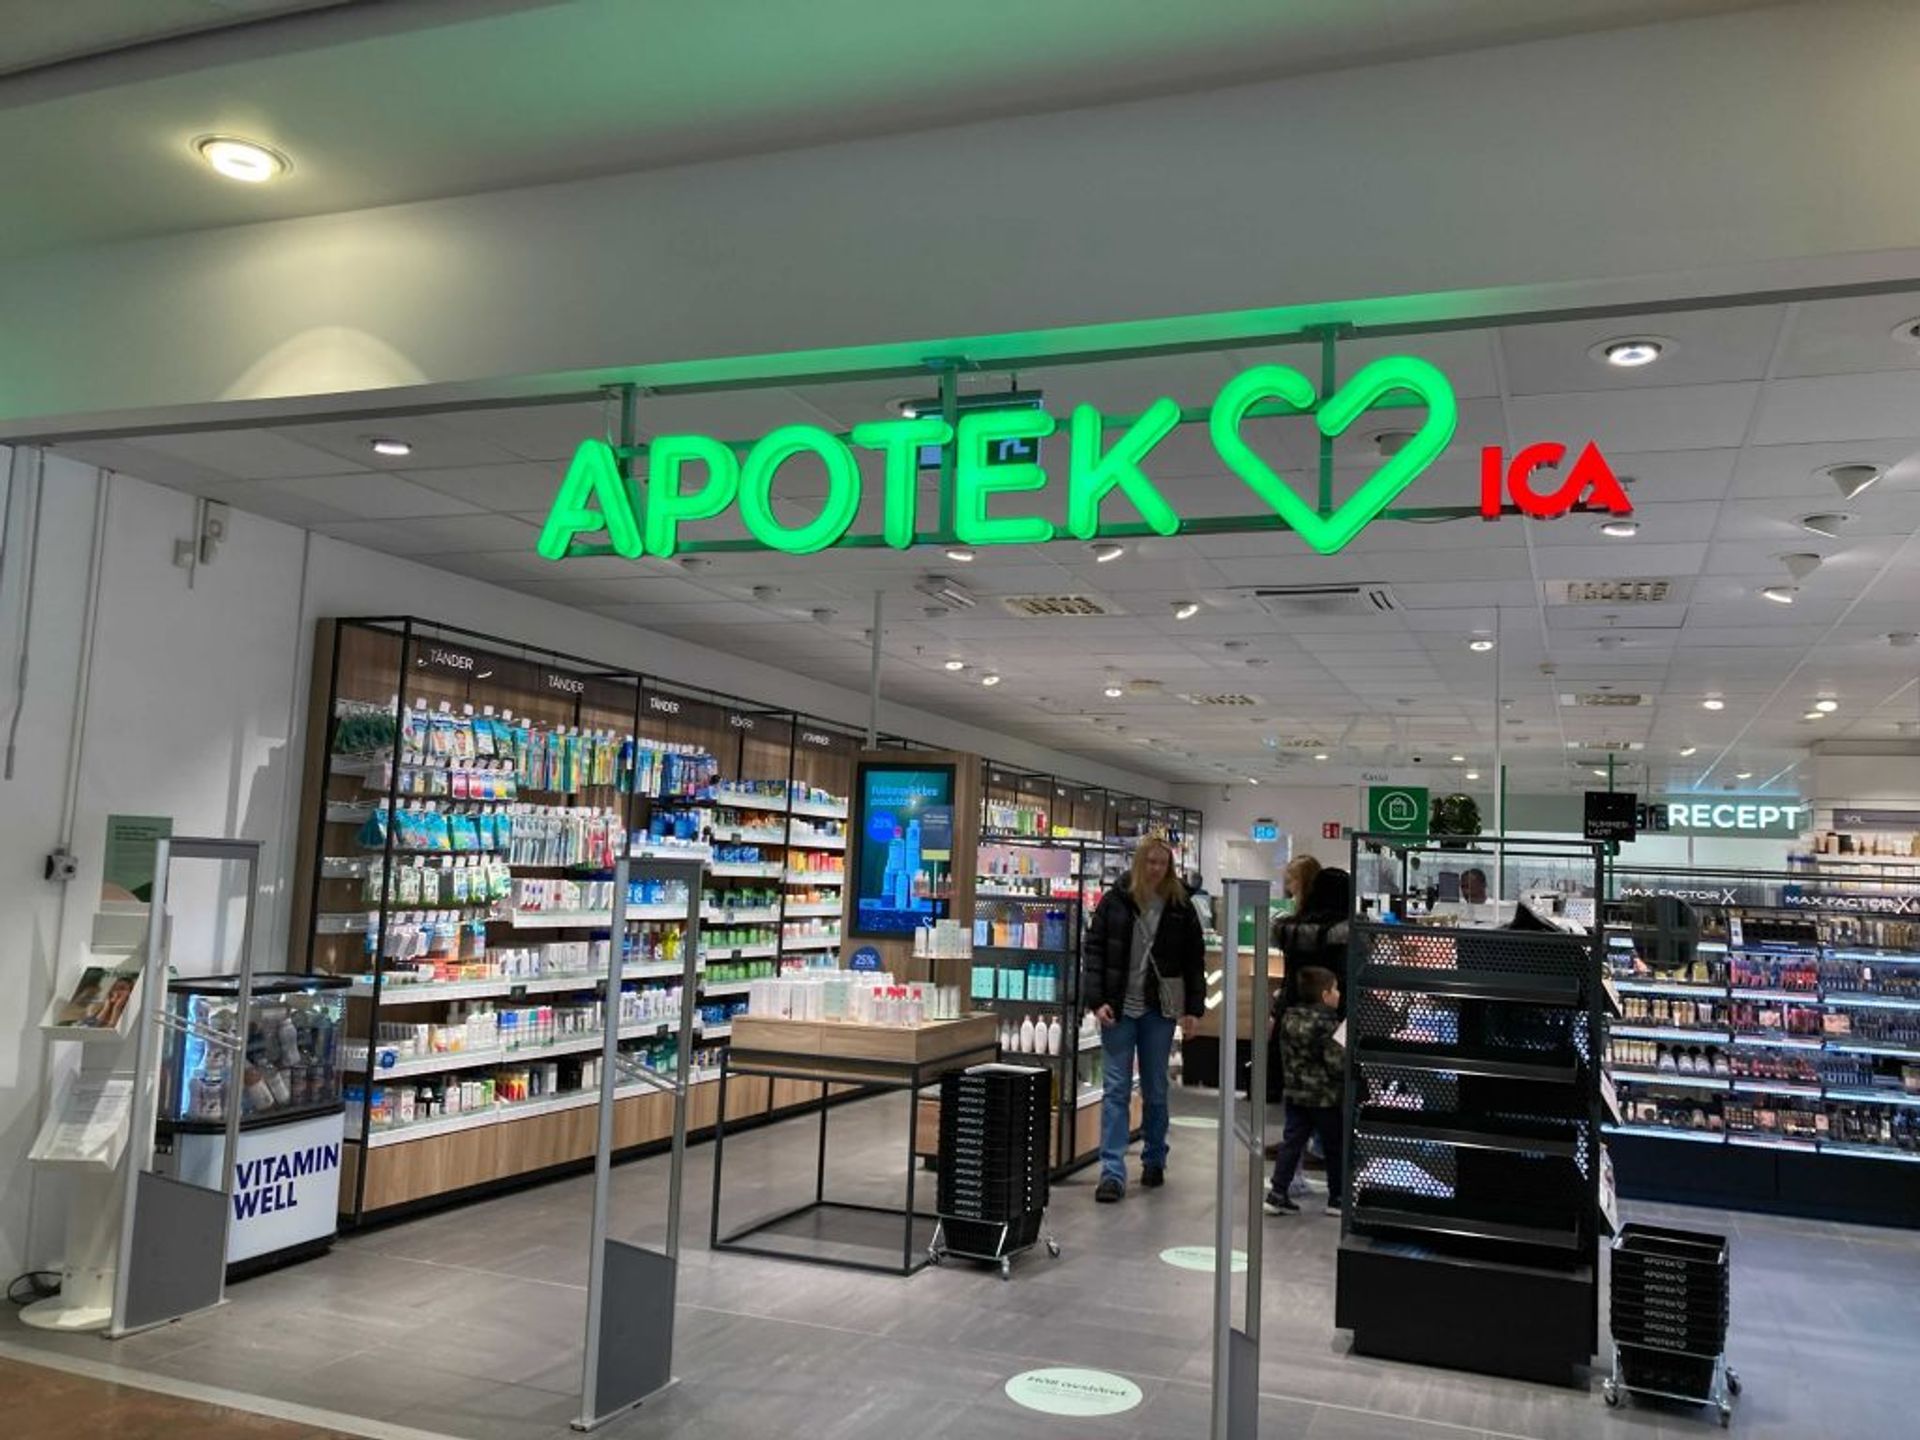 Apotek Hjärtat shop from the outside.